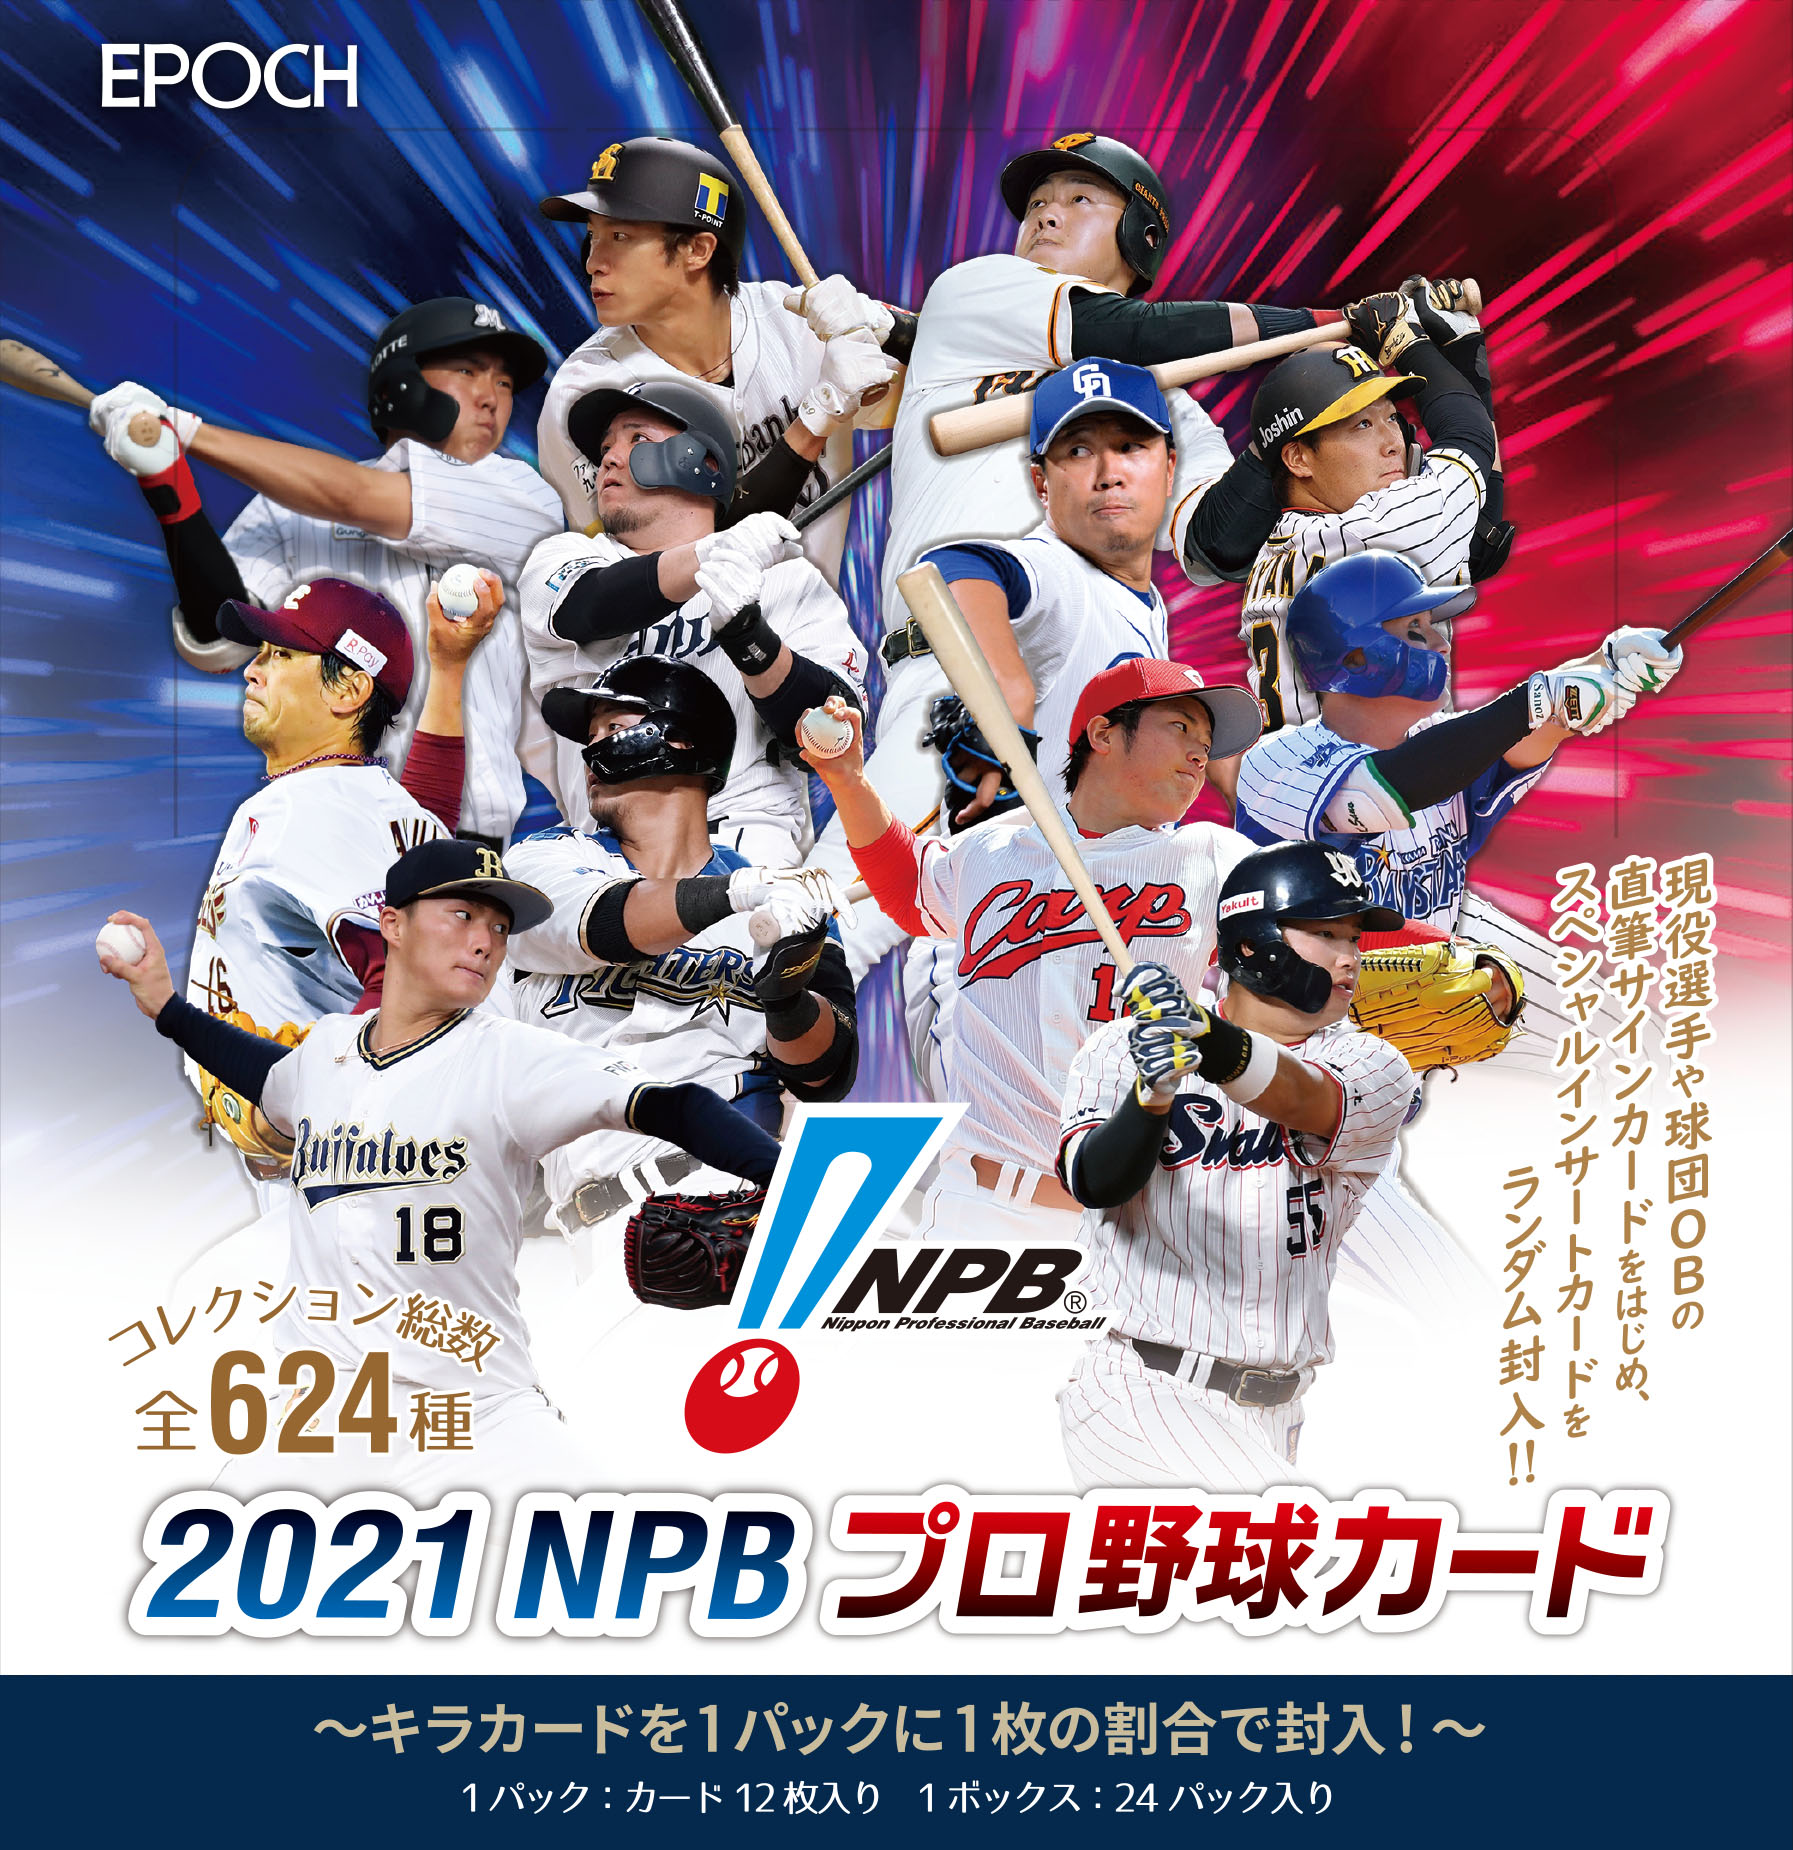 EPOCH 2021 NPB プロ野球カード【製品情報】 | Trading Card Journal